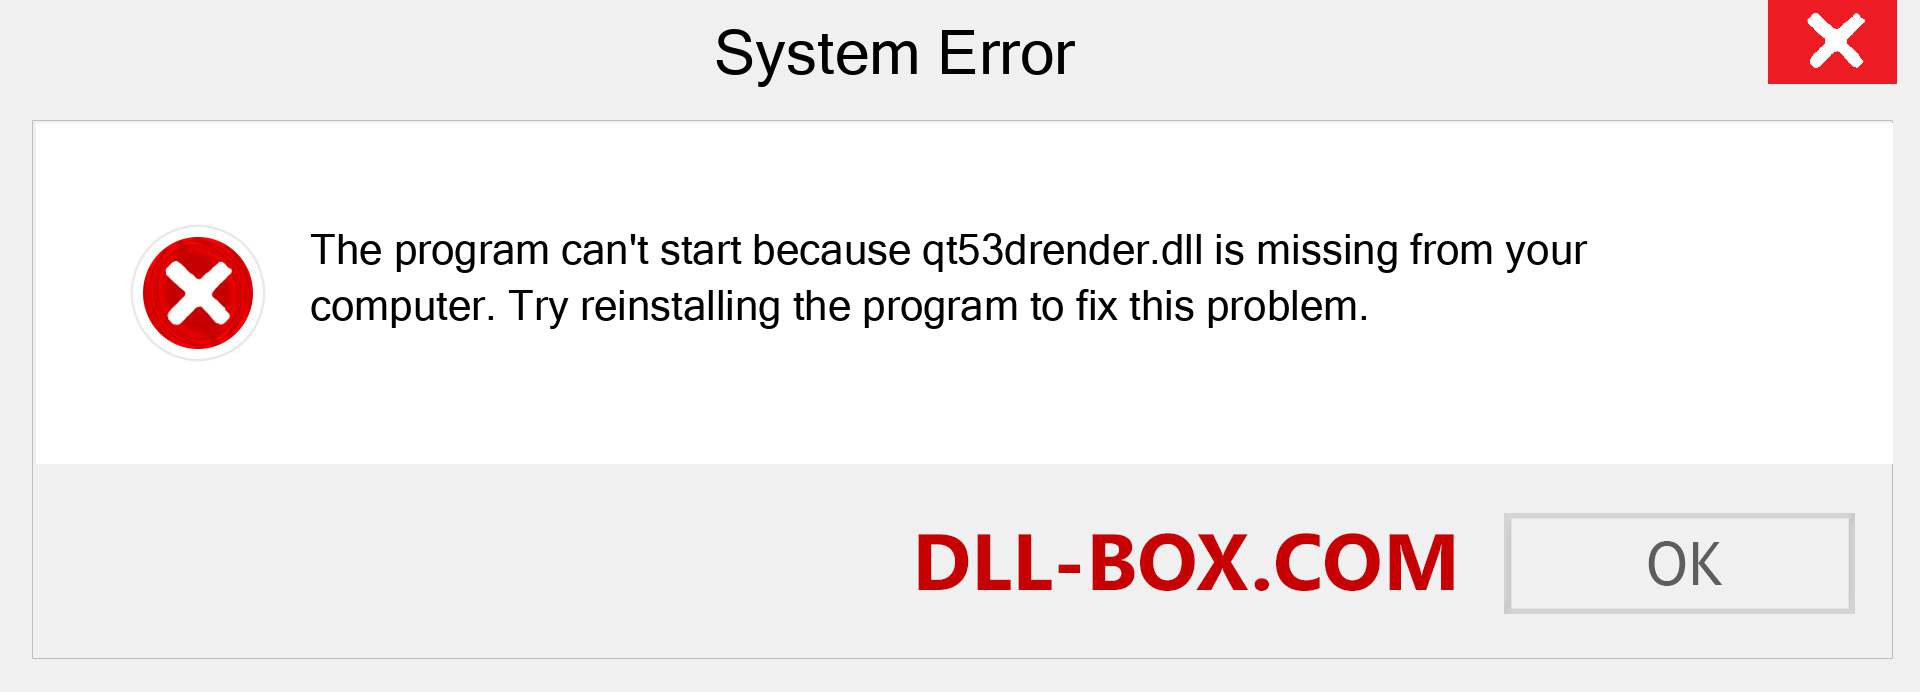  qt53drender.dll file is missing?. Download for Windows 7, 8, 10 - Fix  qt53drender dll Missing Error on Windows, photos, images